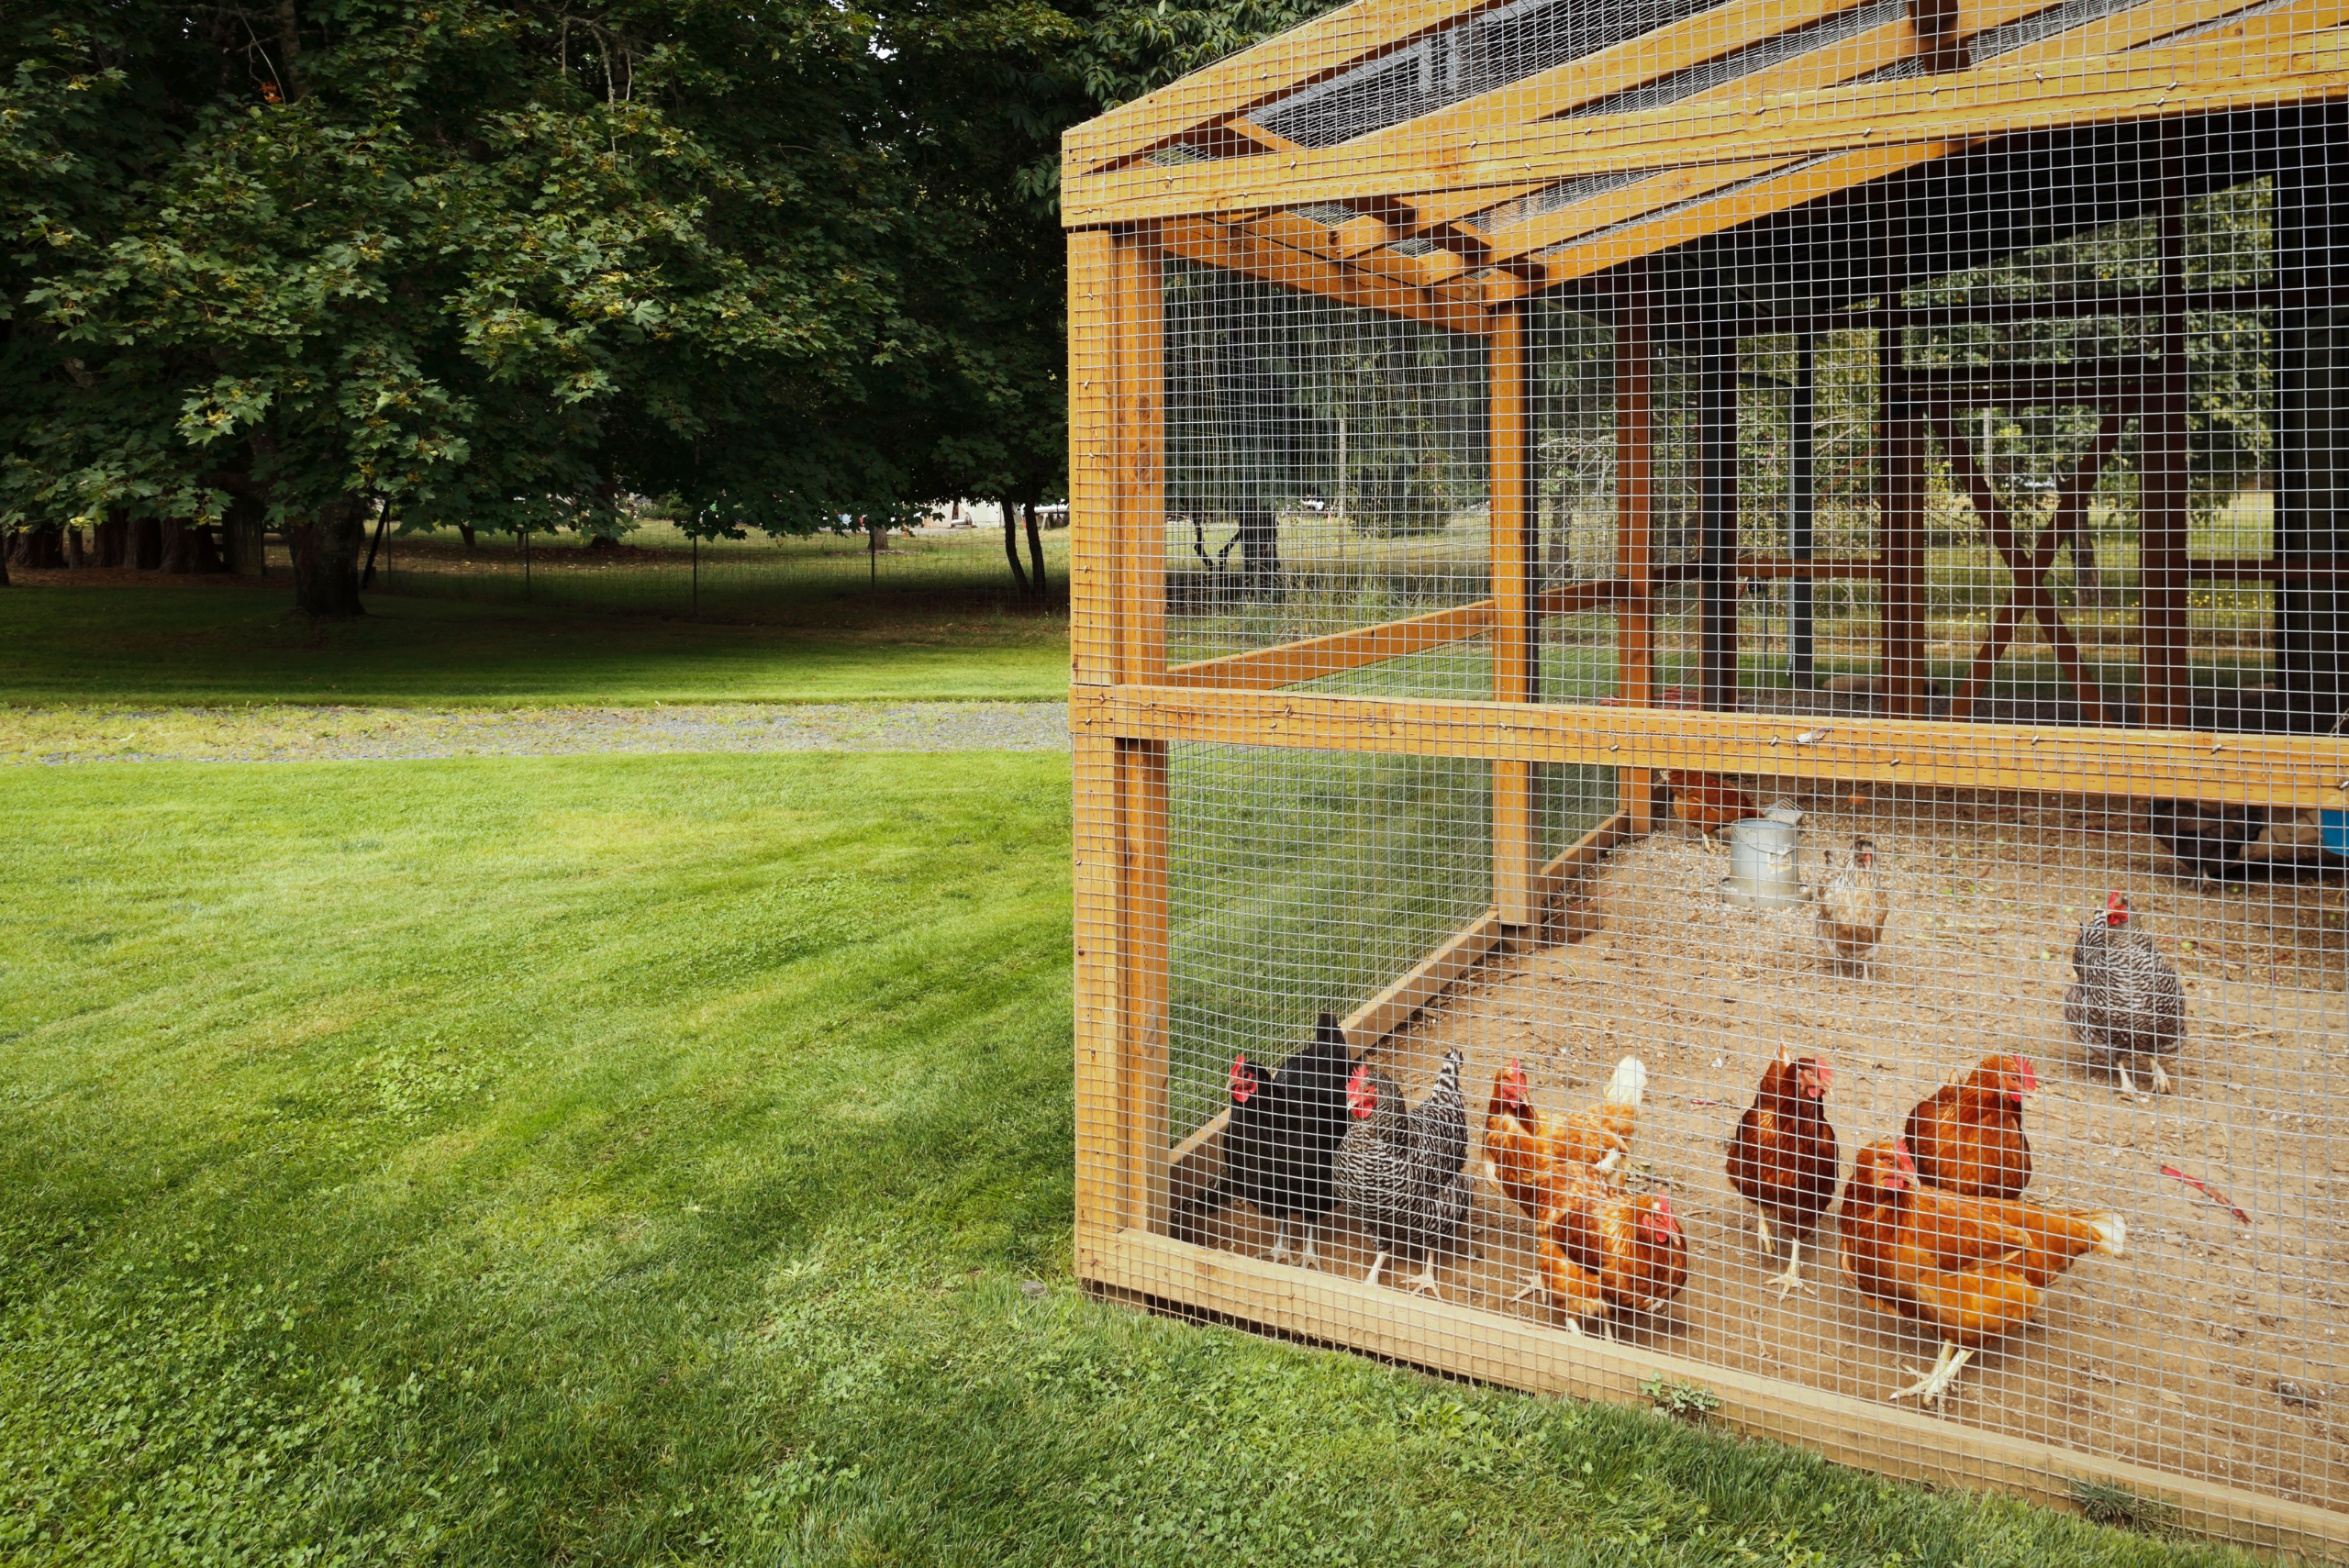 Wooden chicken coop with chicken-wire fencing.